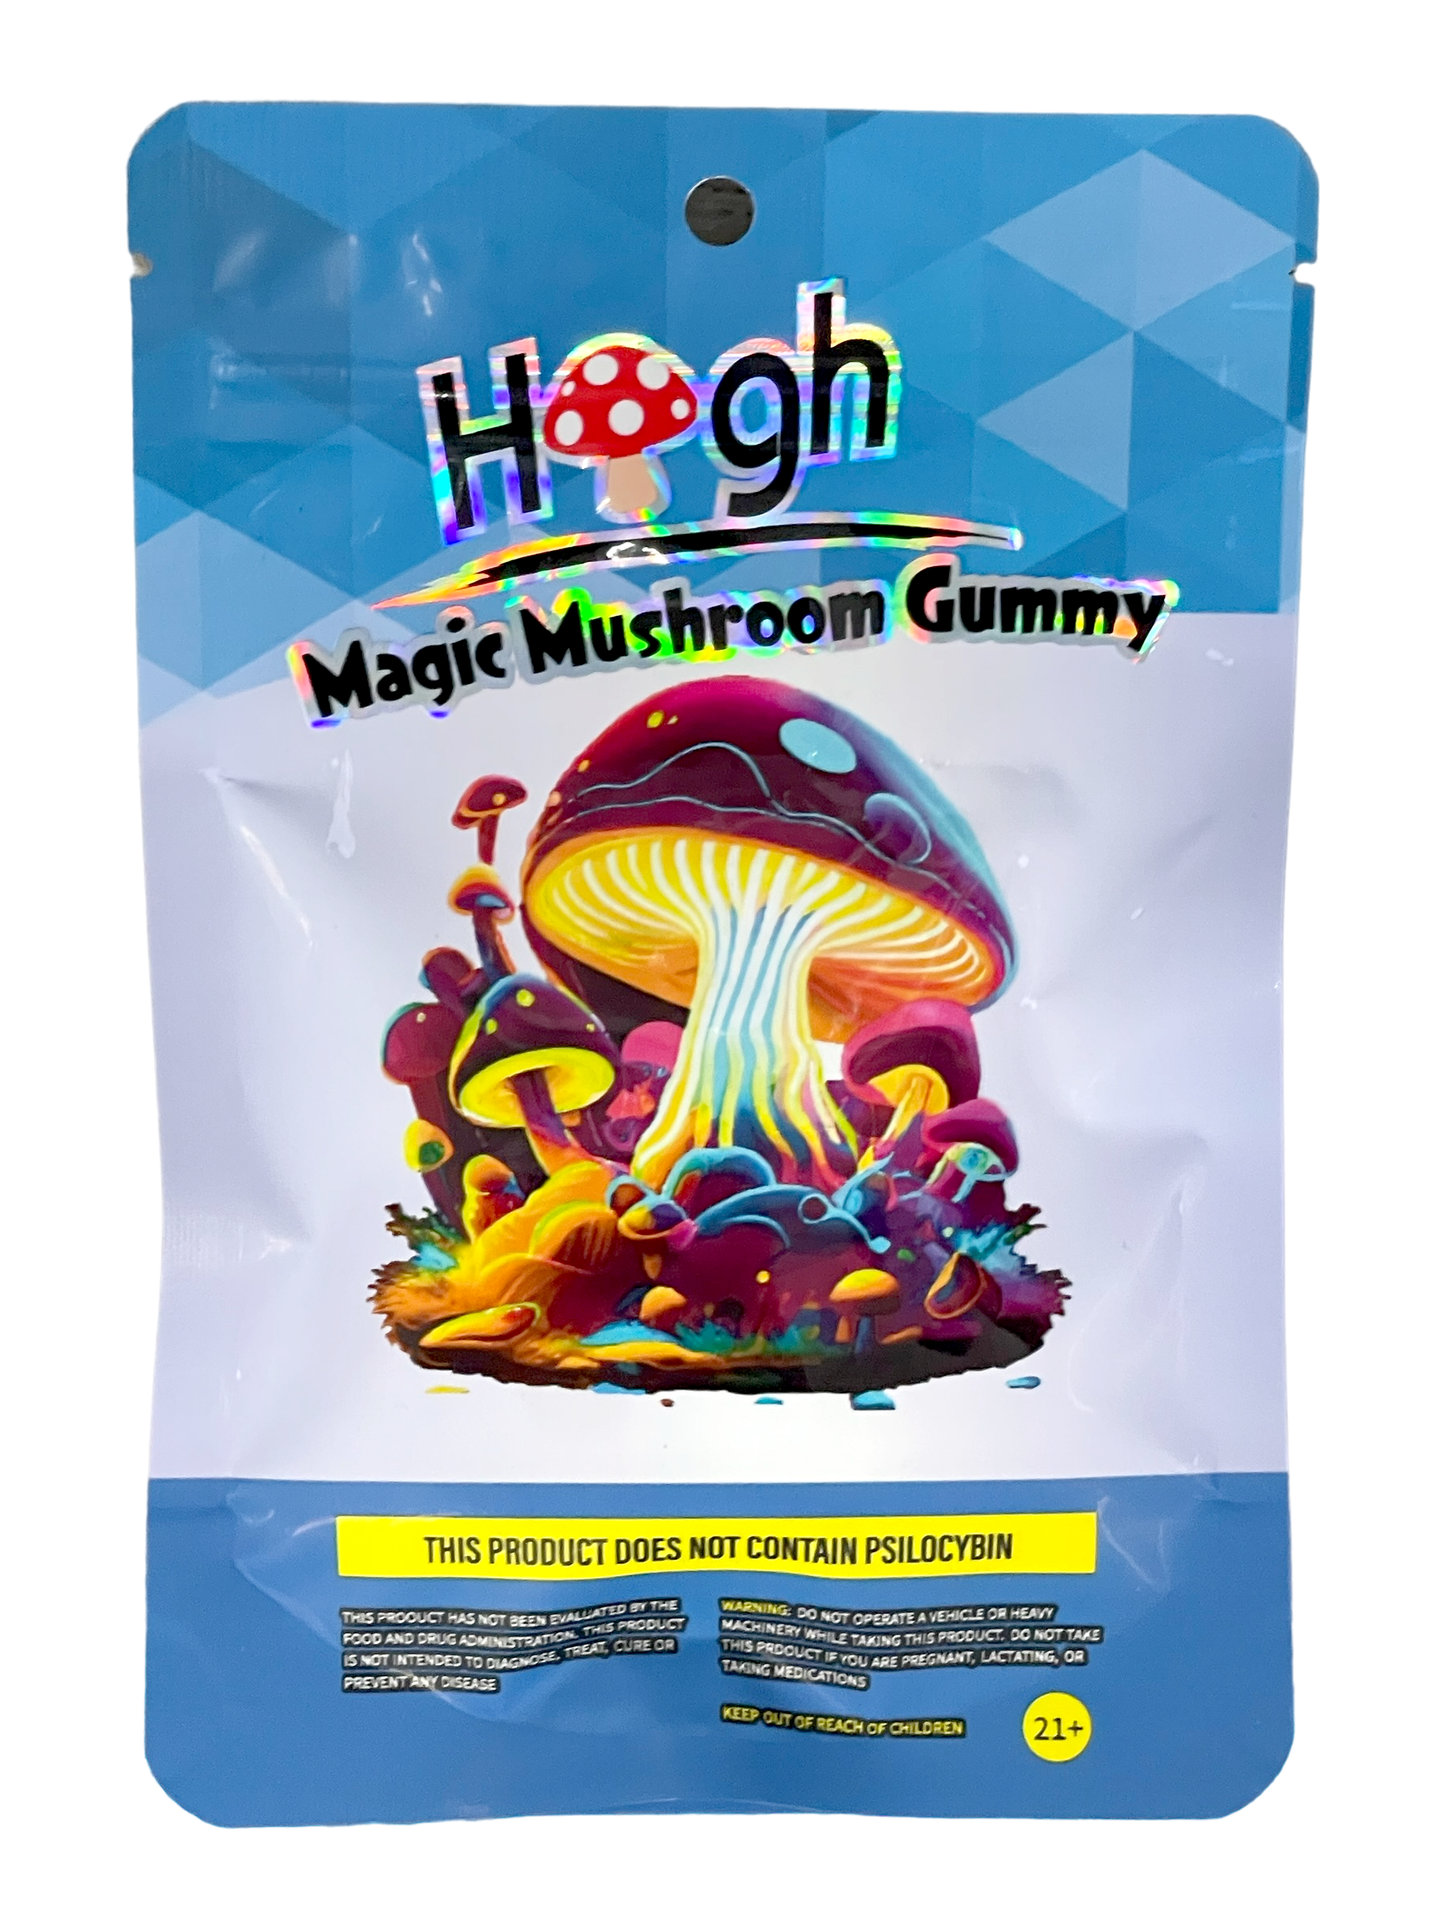 Magic Mushroom Gummy Raspberry (600mg per gummy) (3000mg per pack)